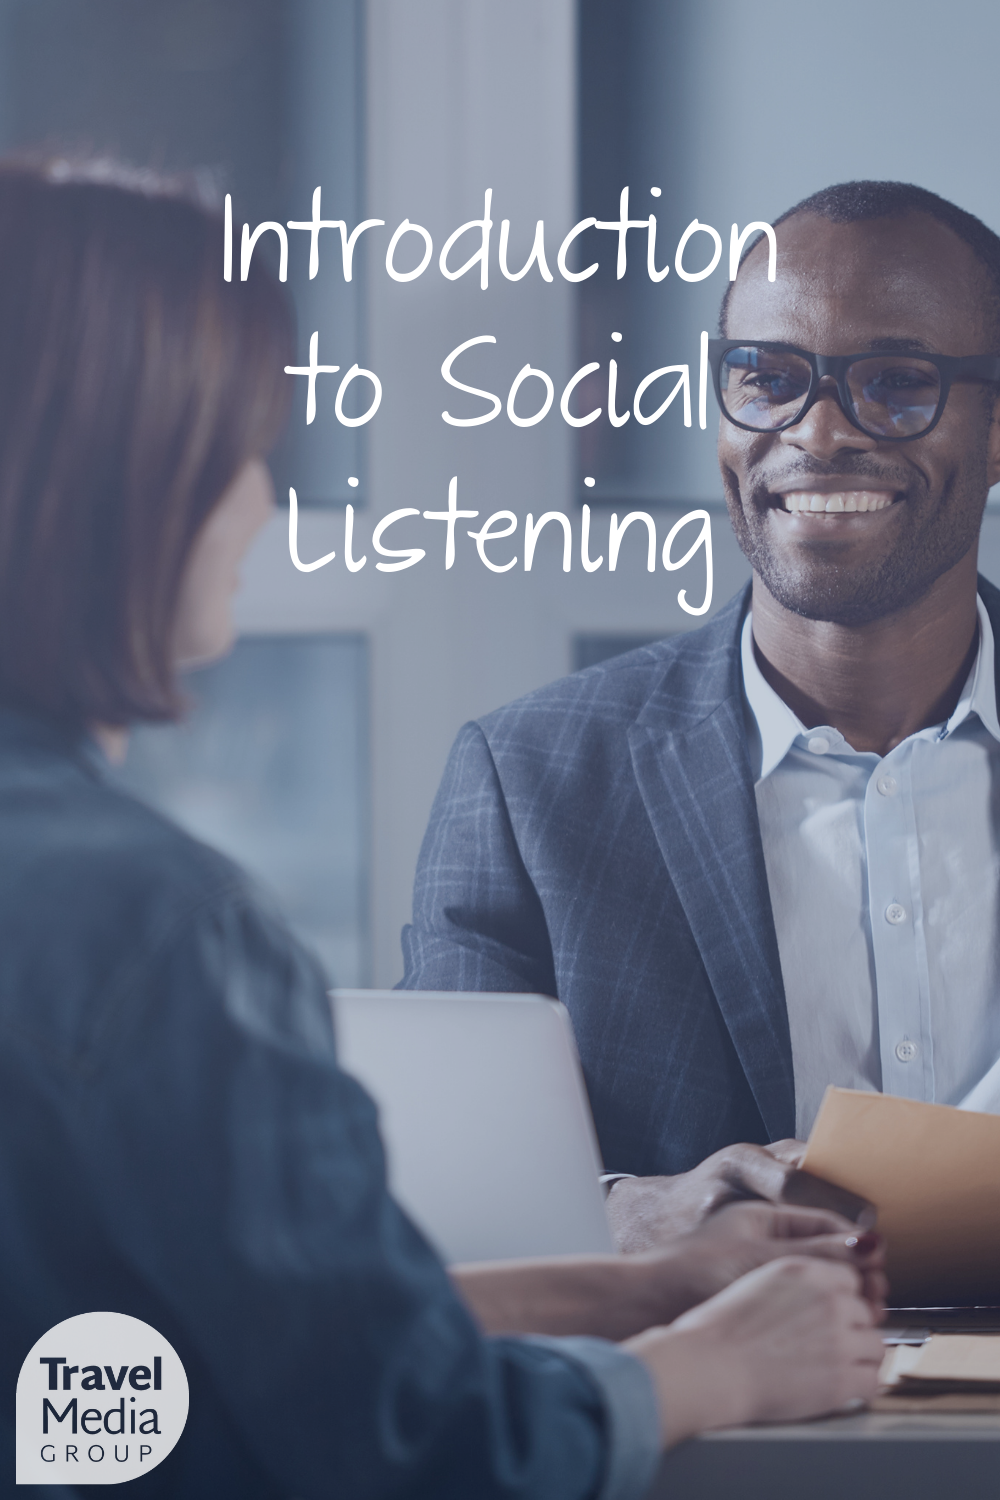 Social listening can help you develop an advantageous marketing strategy.